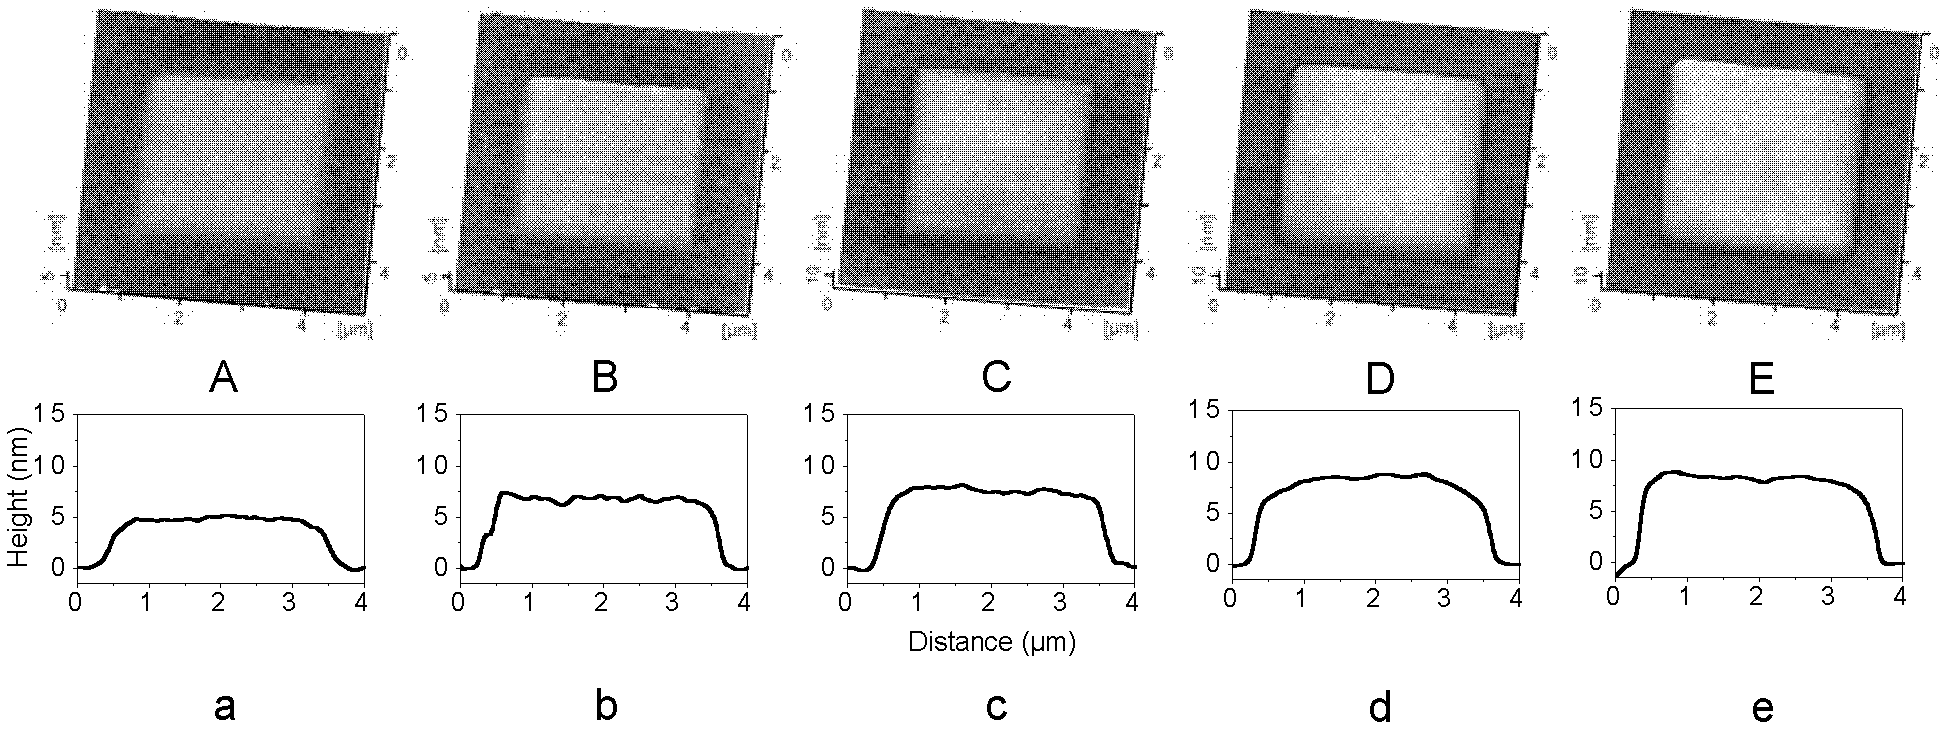 Glass surface nanofabrication method based on friction-induced selective etching